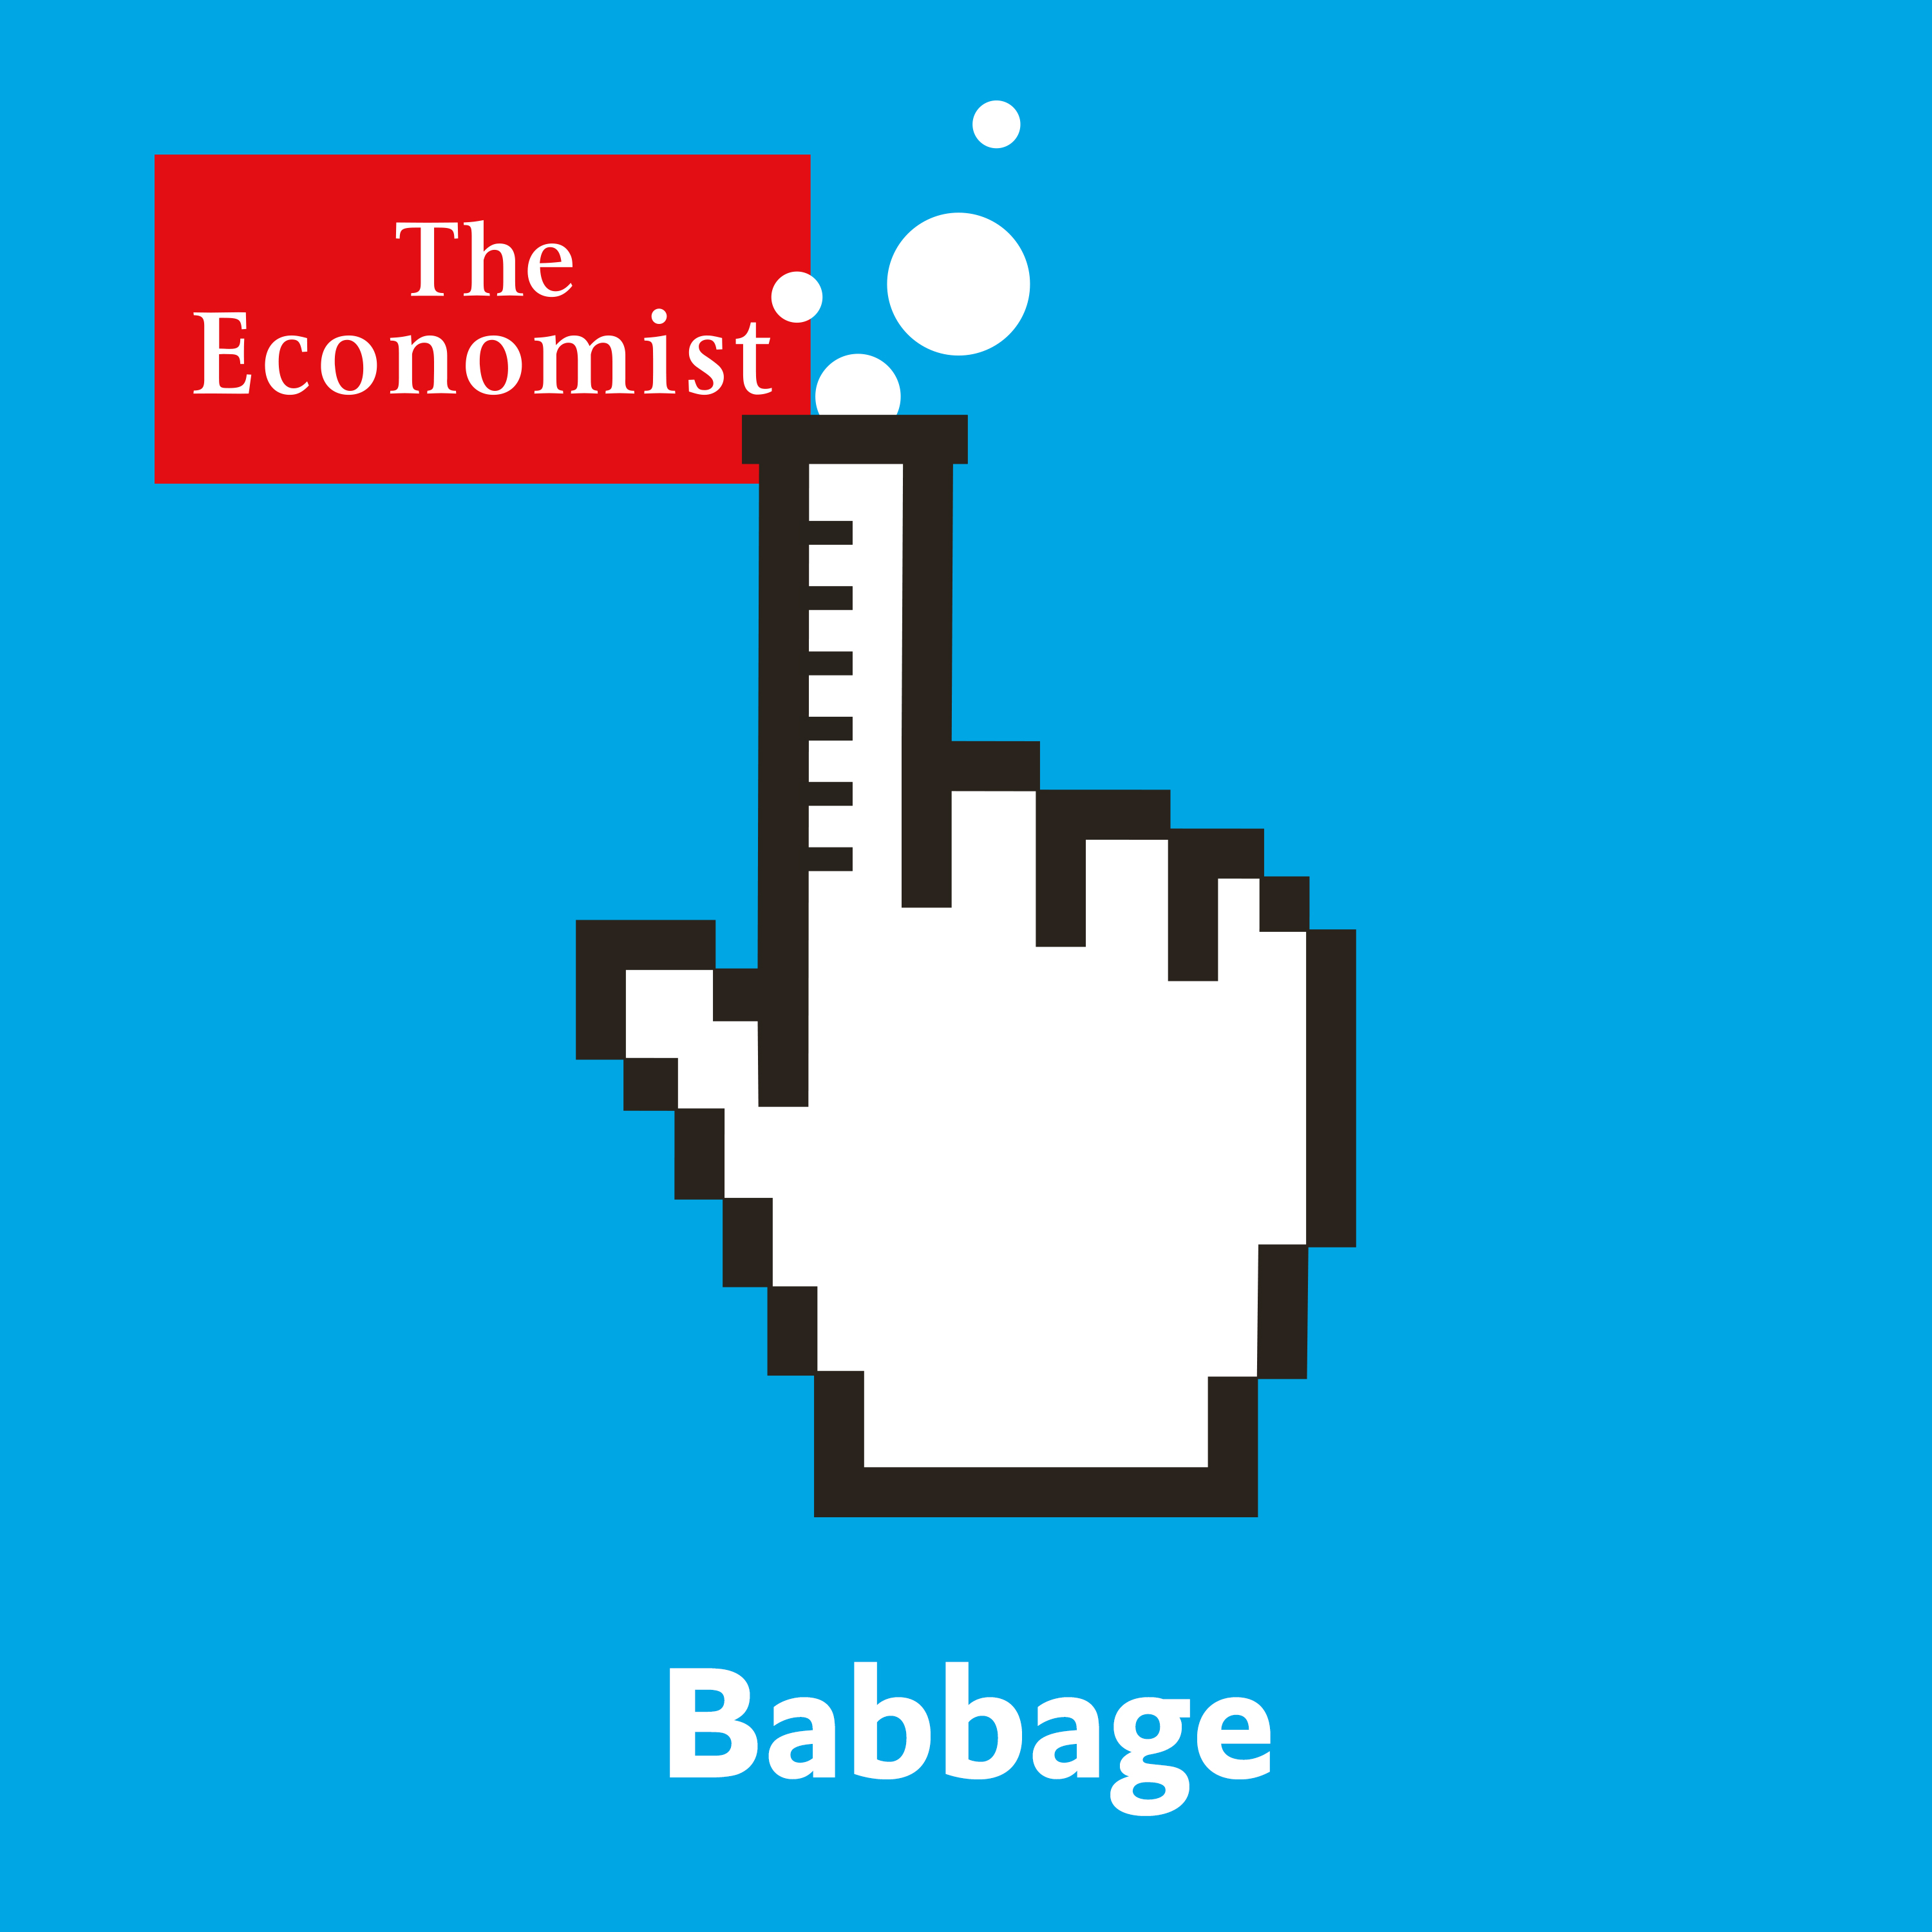 Babbage: The surprising ineffectiveness of Russia’s cyber-war